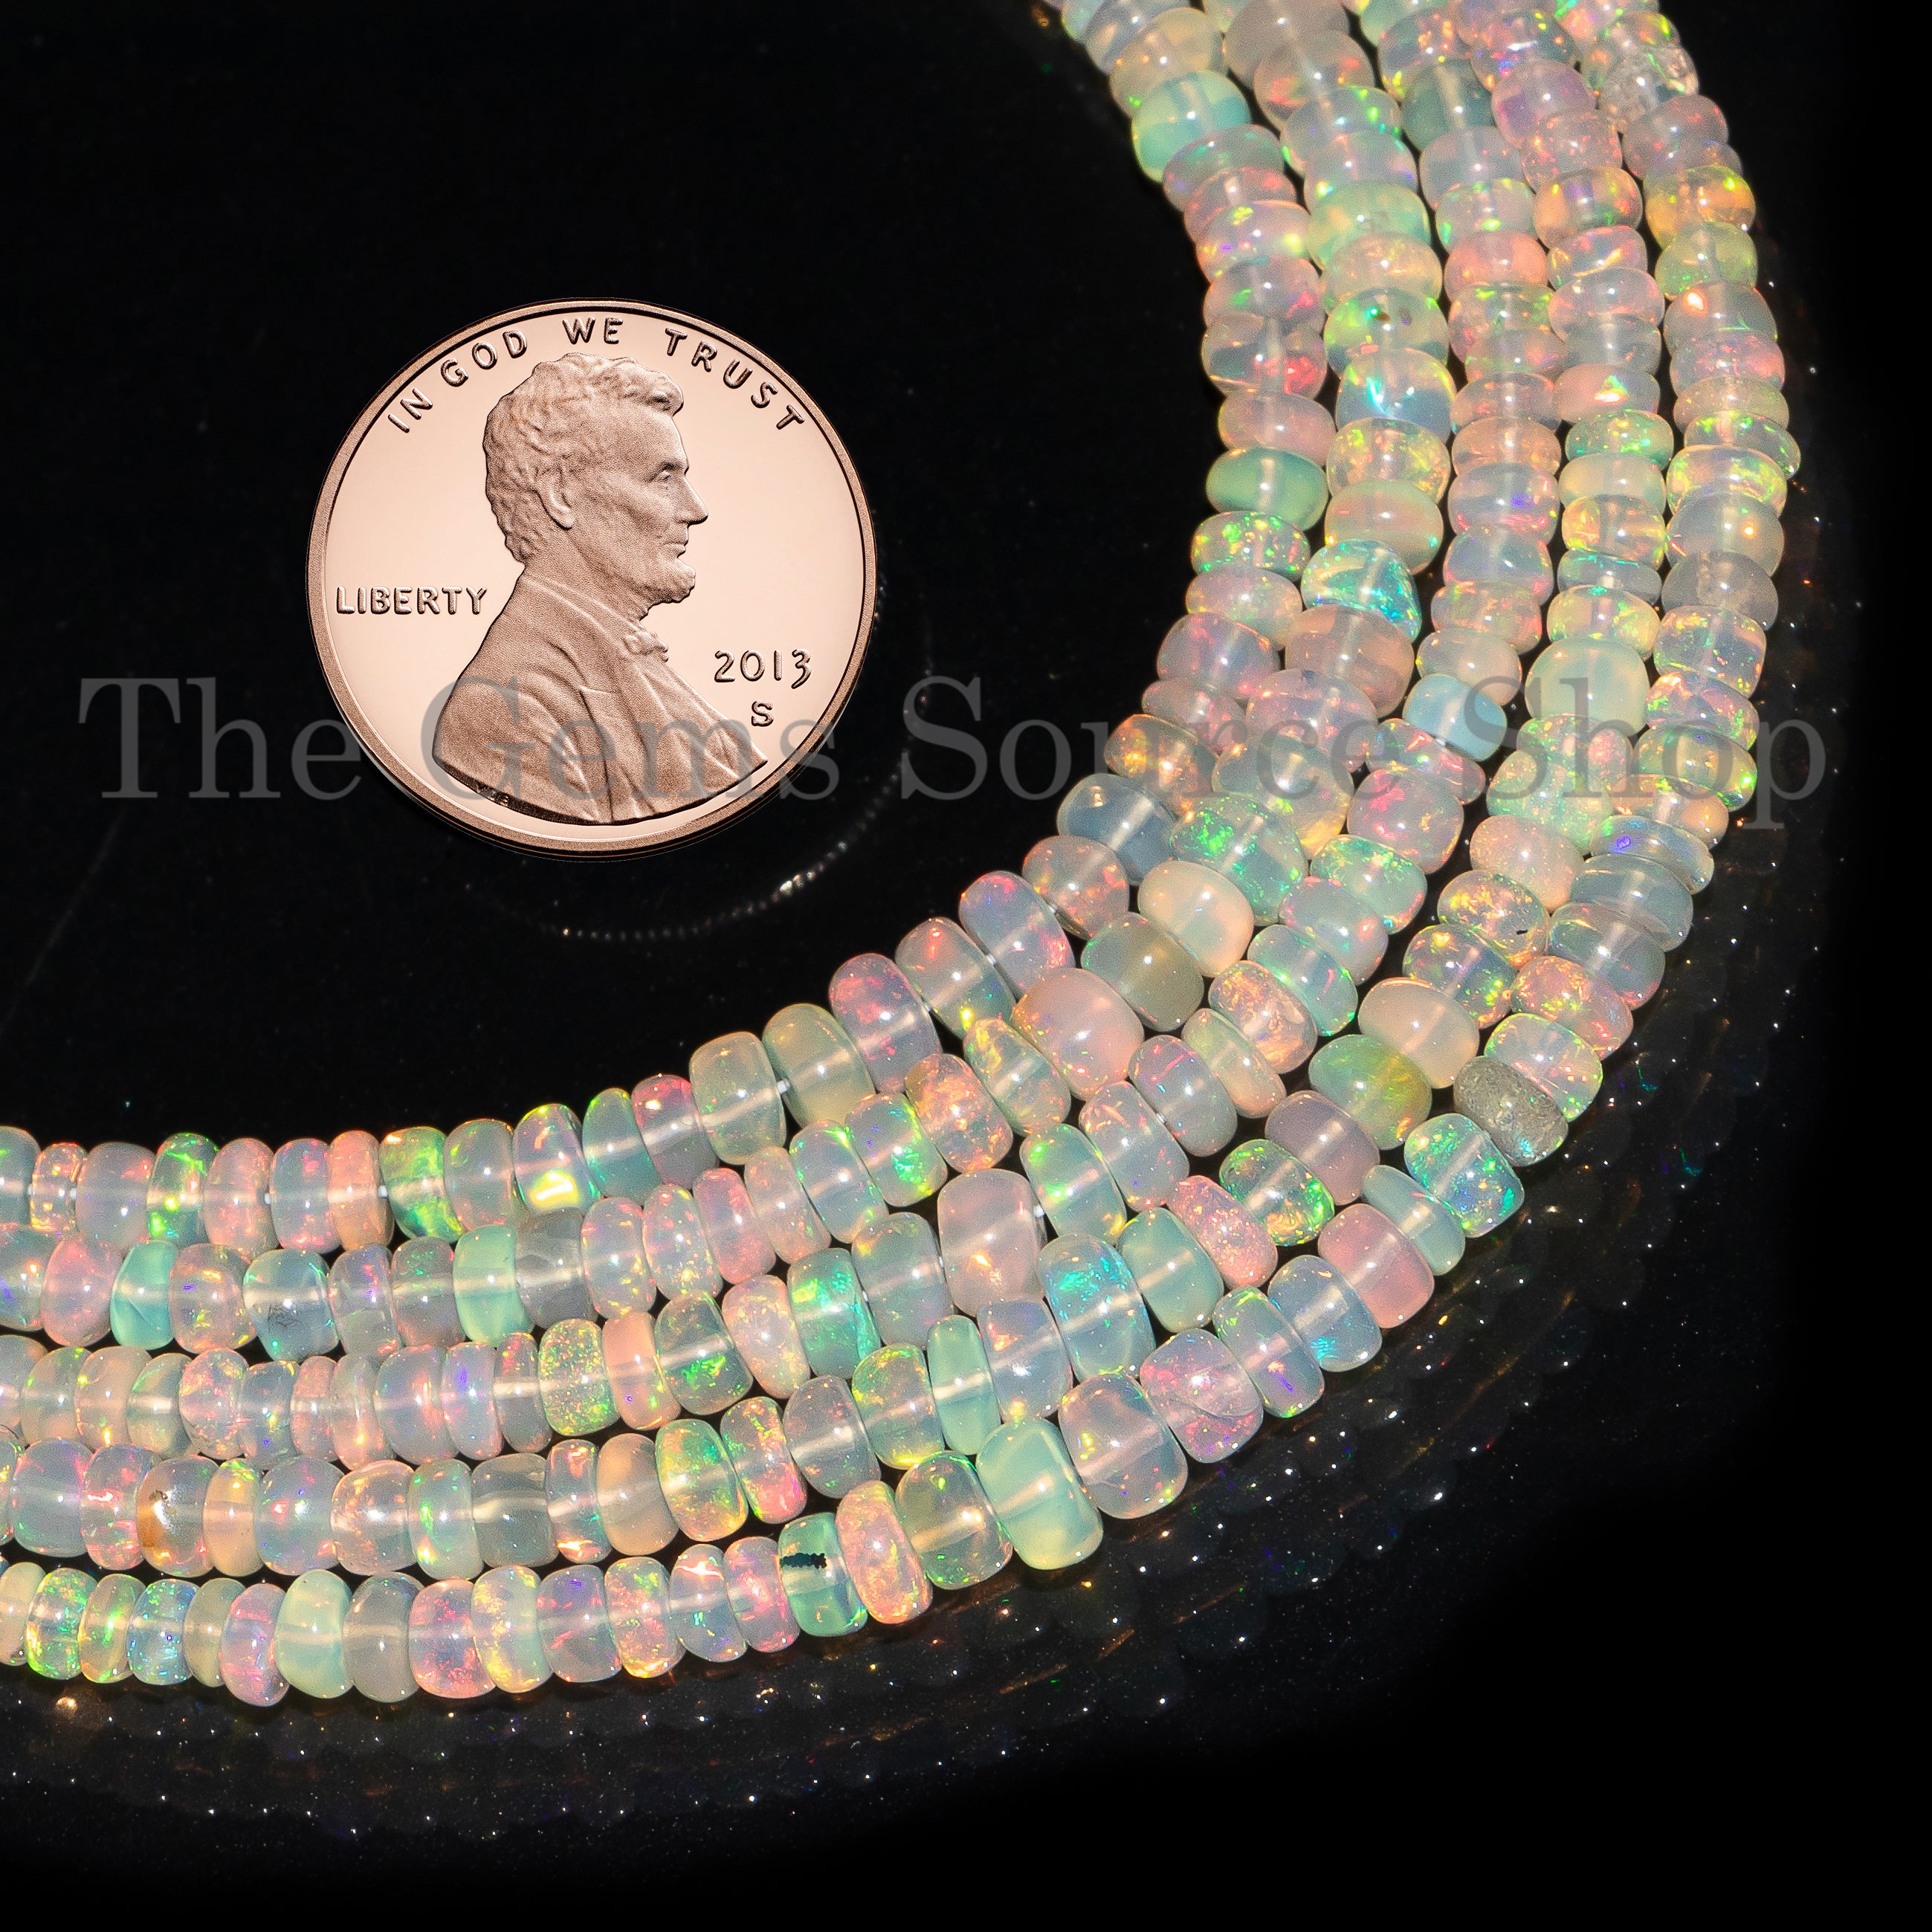 Super Top Quality Ethiopian Opal Beads, Ethiopian Opal Smooth Beads, Ethiopian Opal Rondelle Beads, Ethiopian Opal Gemstone Beads